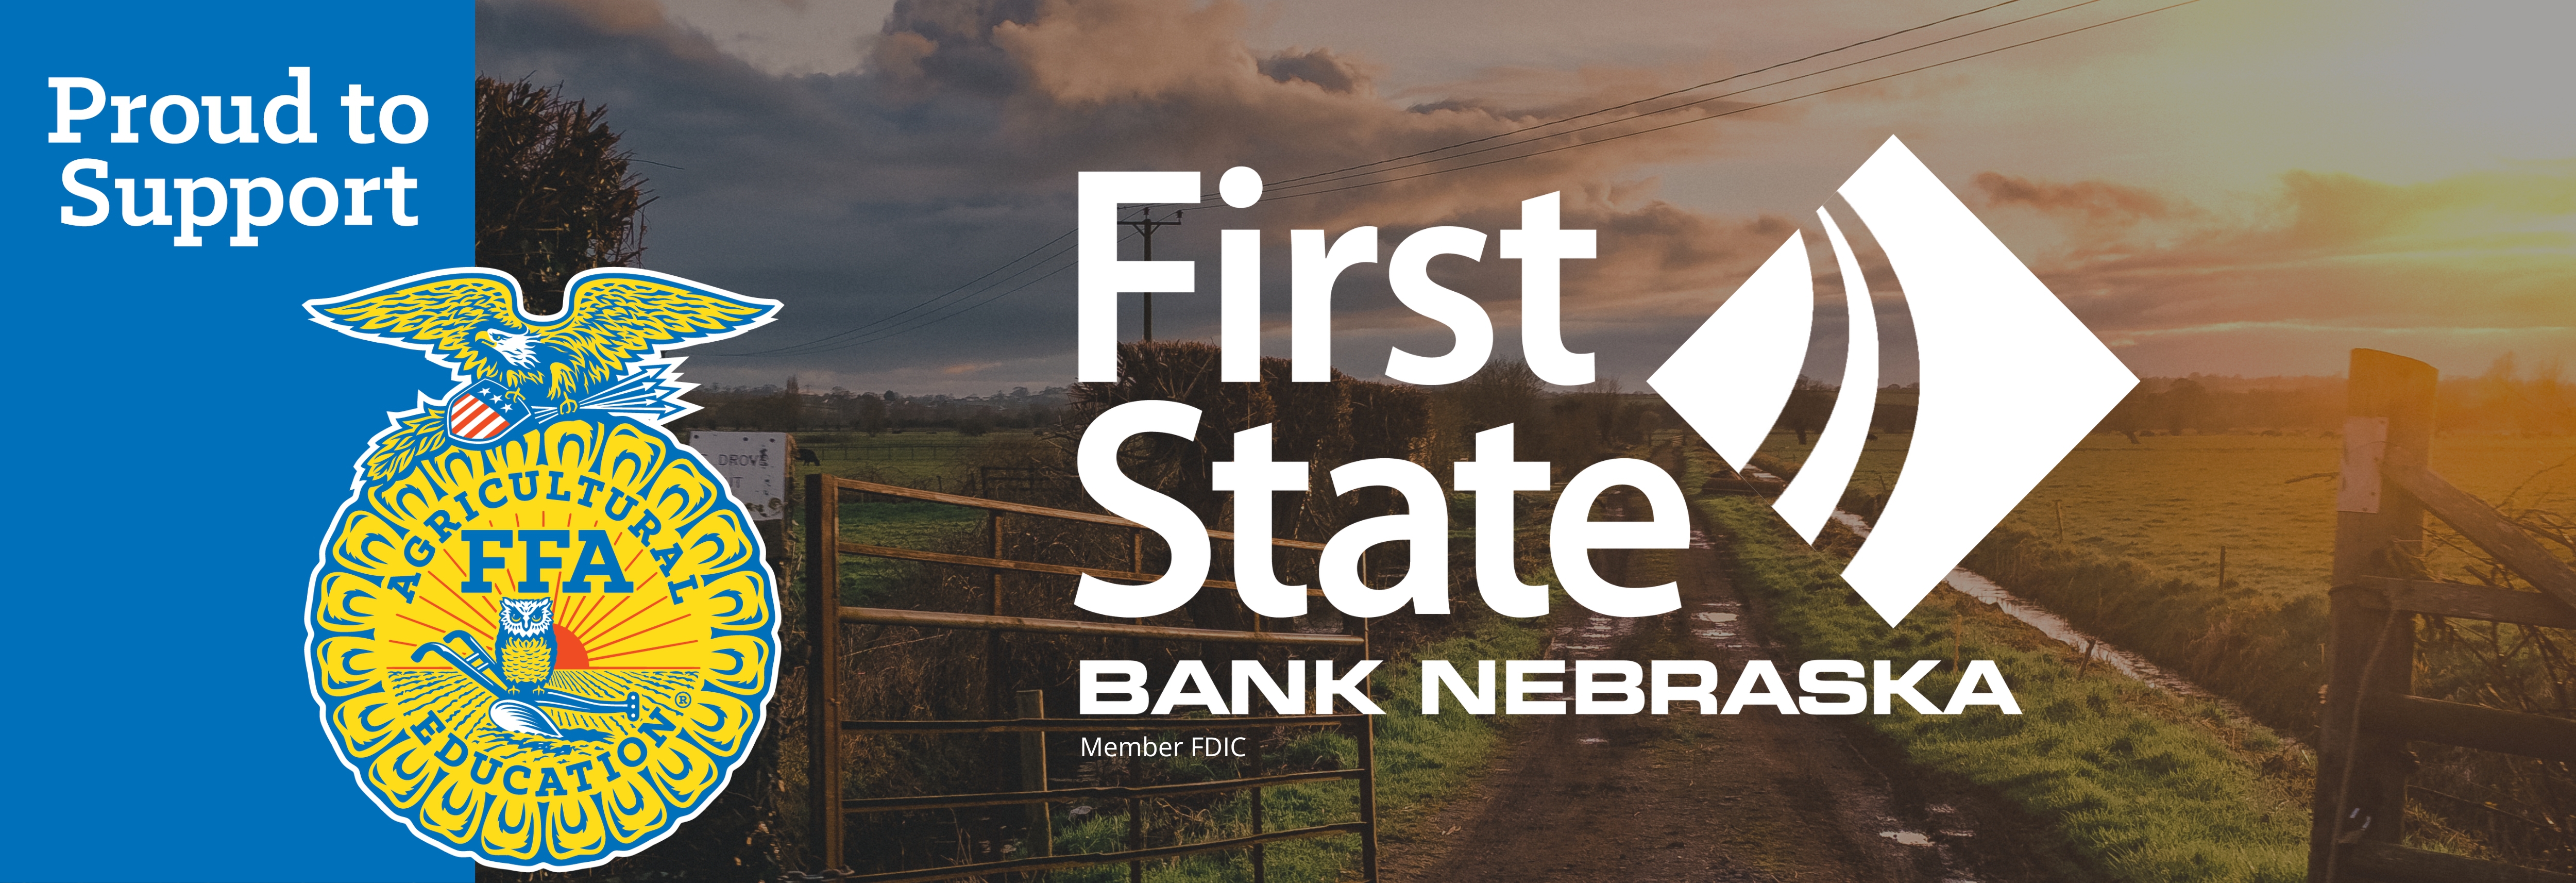 First State Bank Nebraska logo